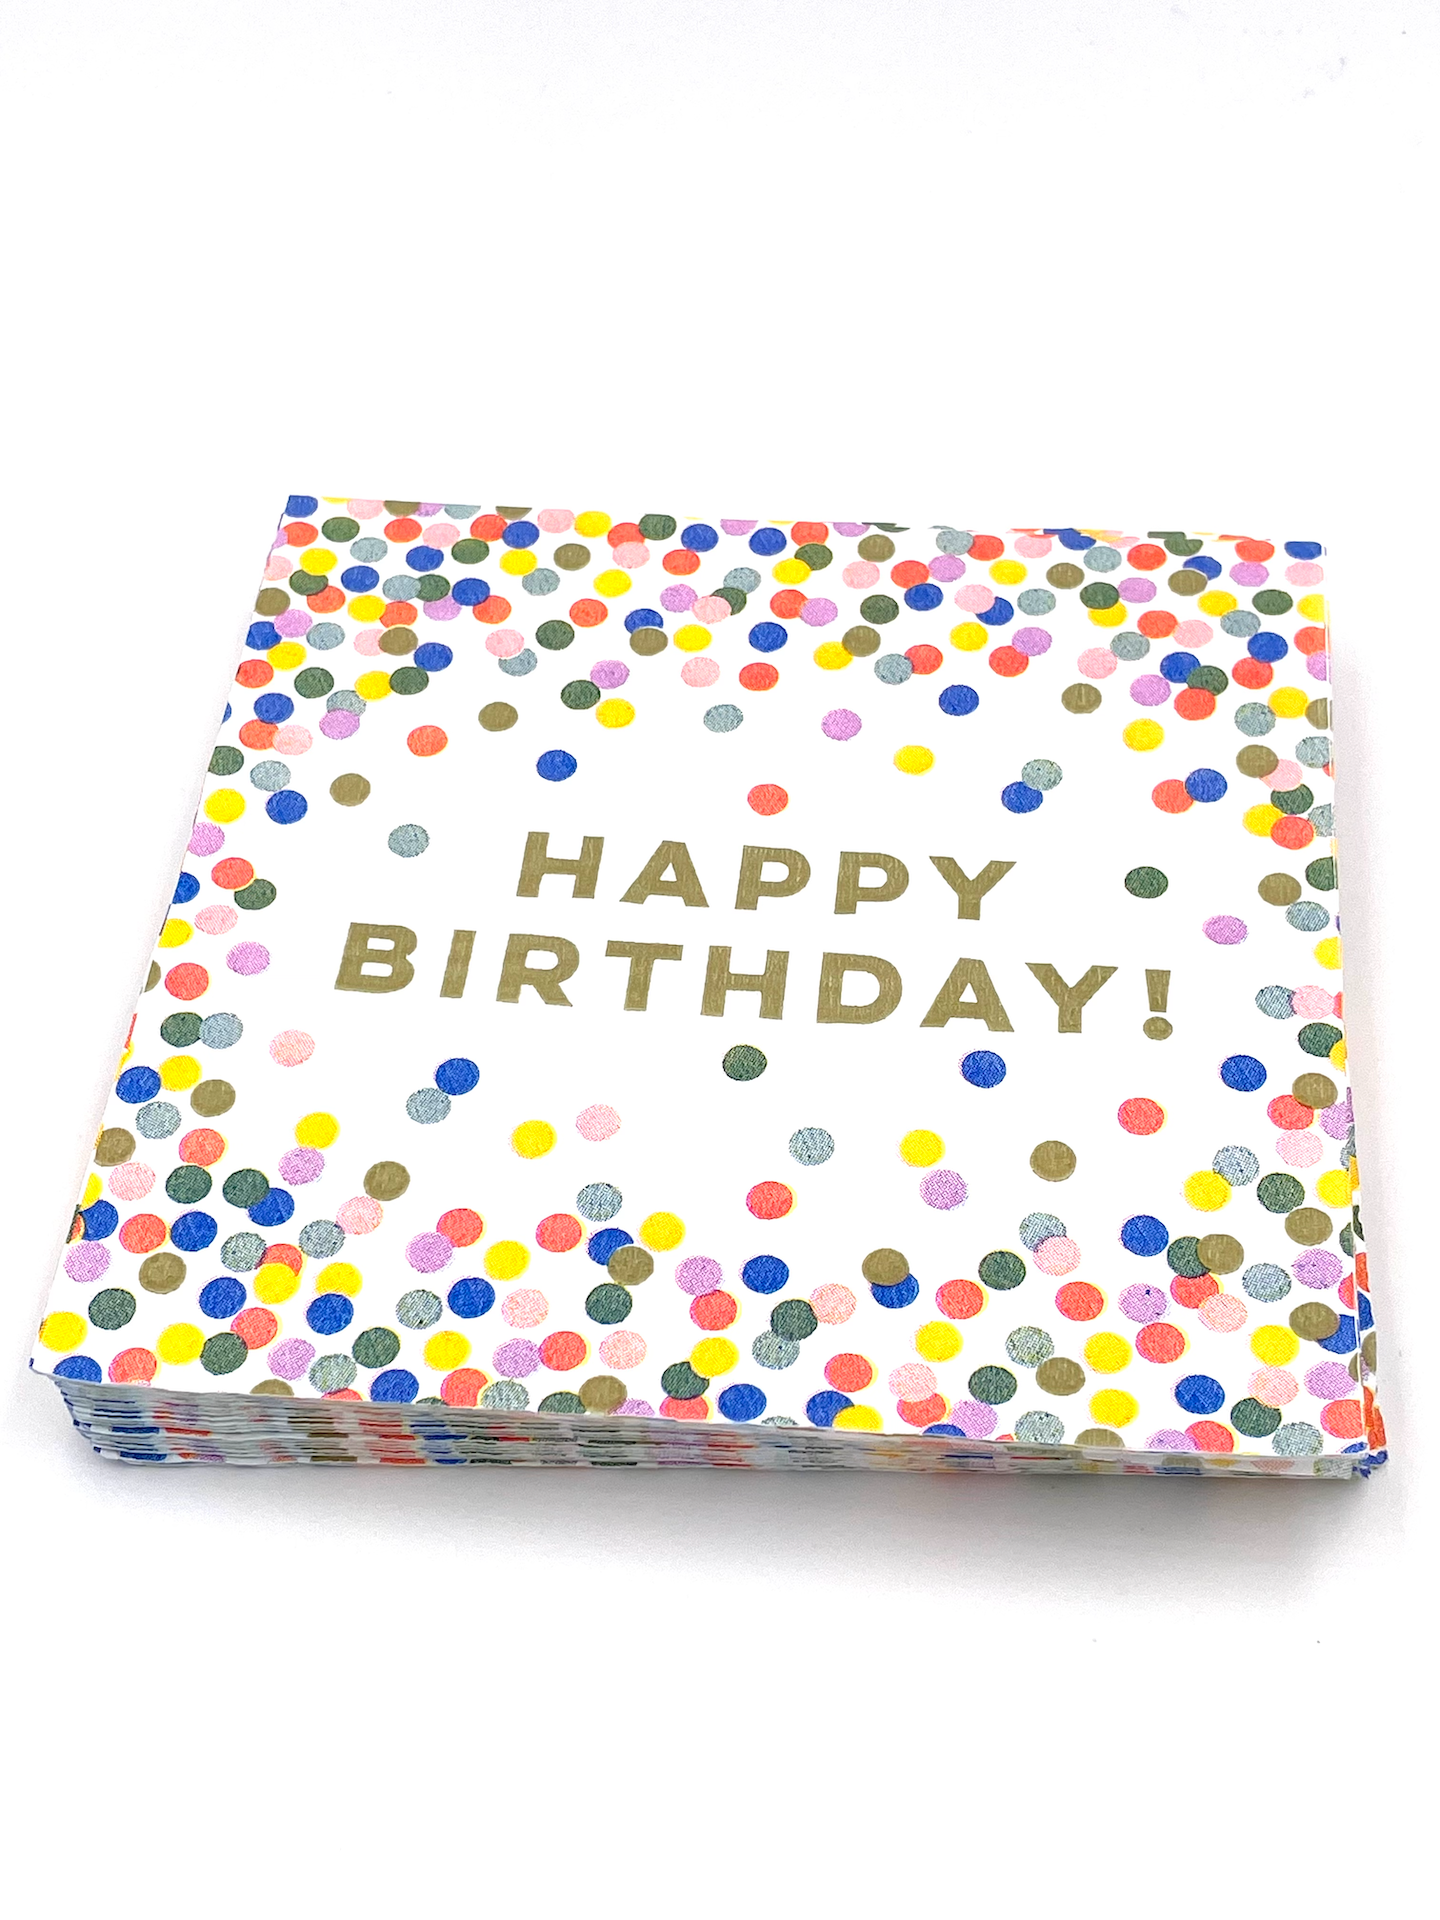 Cocktail Napkins: Happy Birthday! Confetti